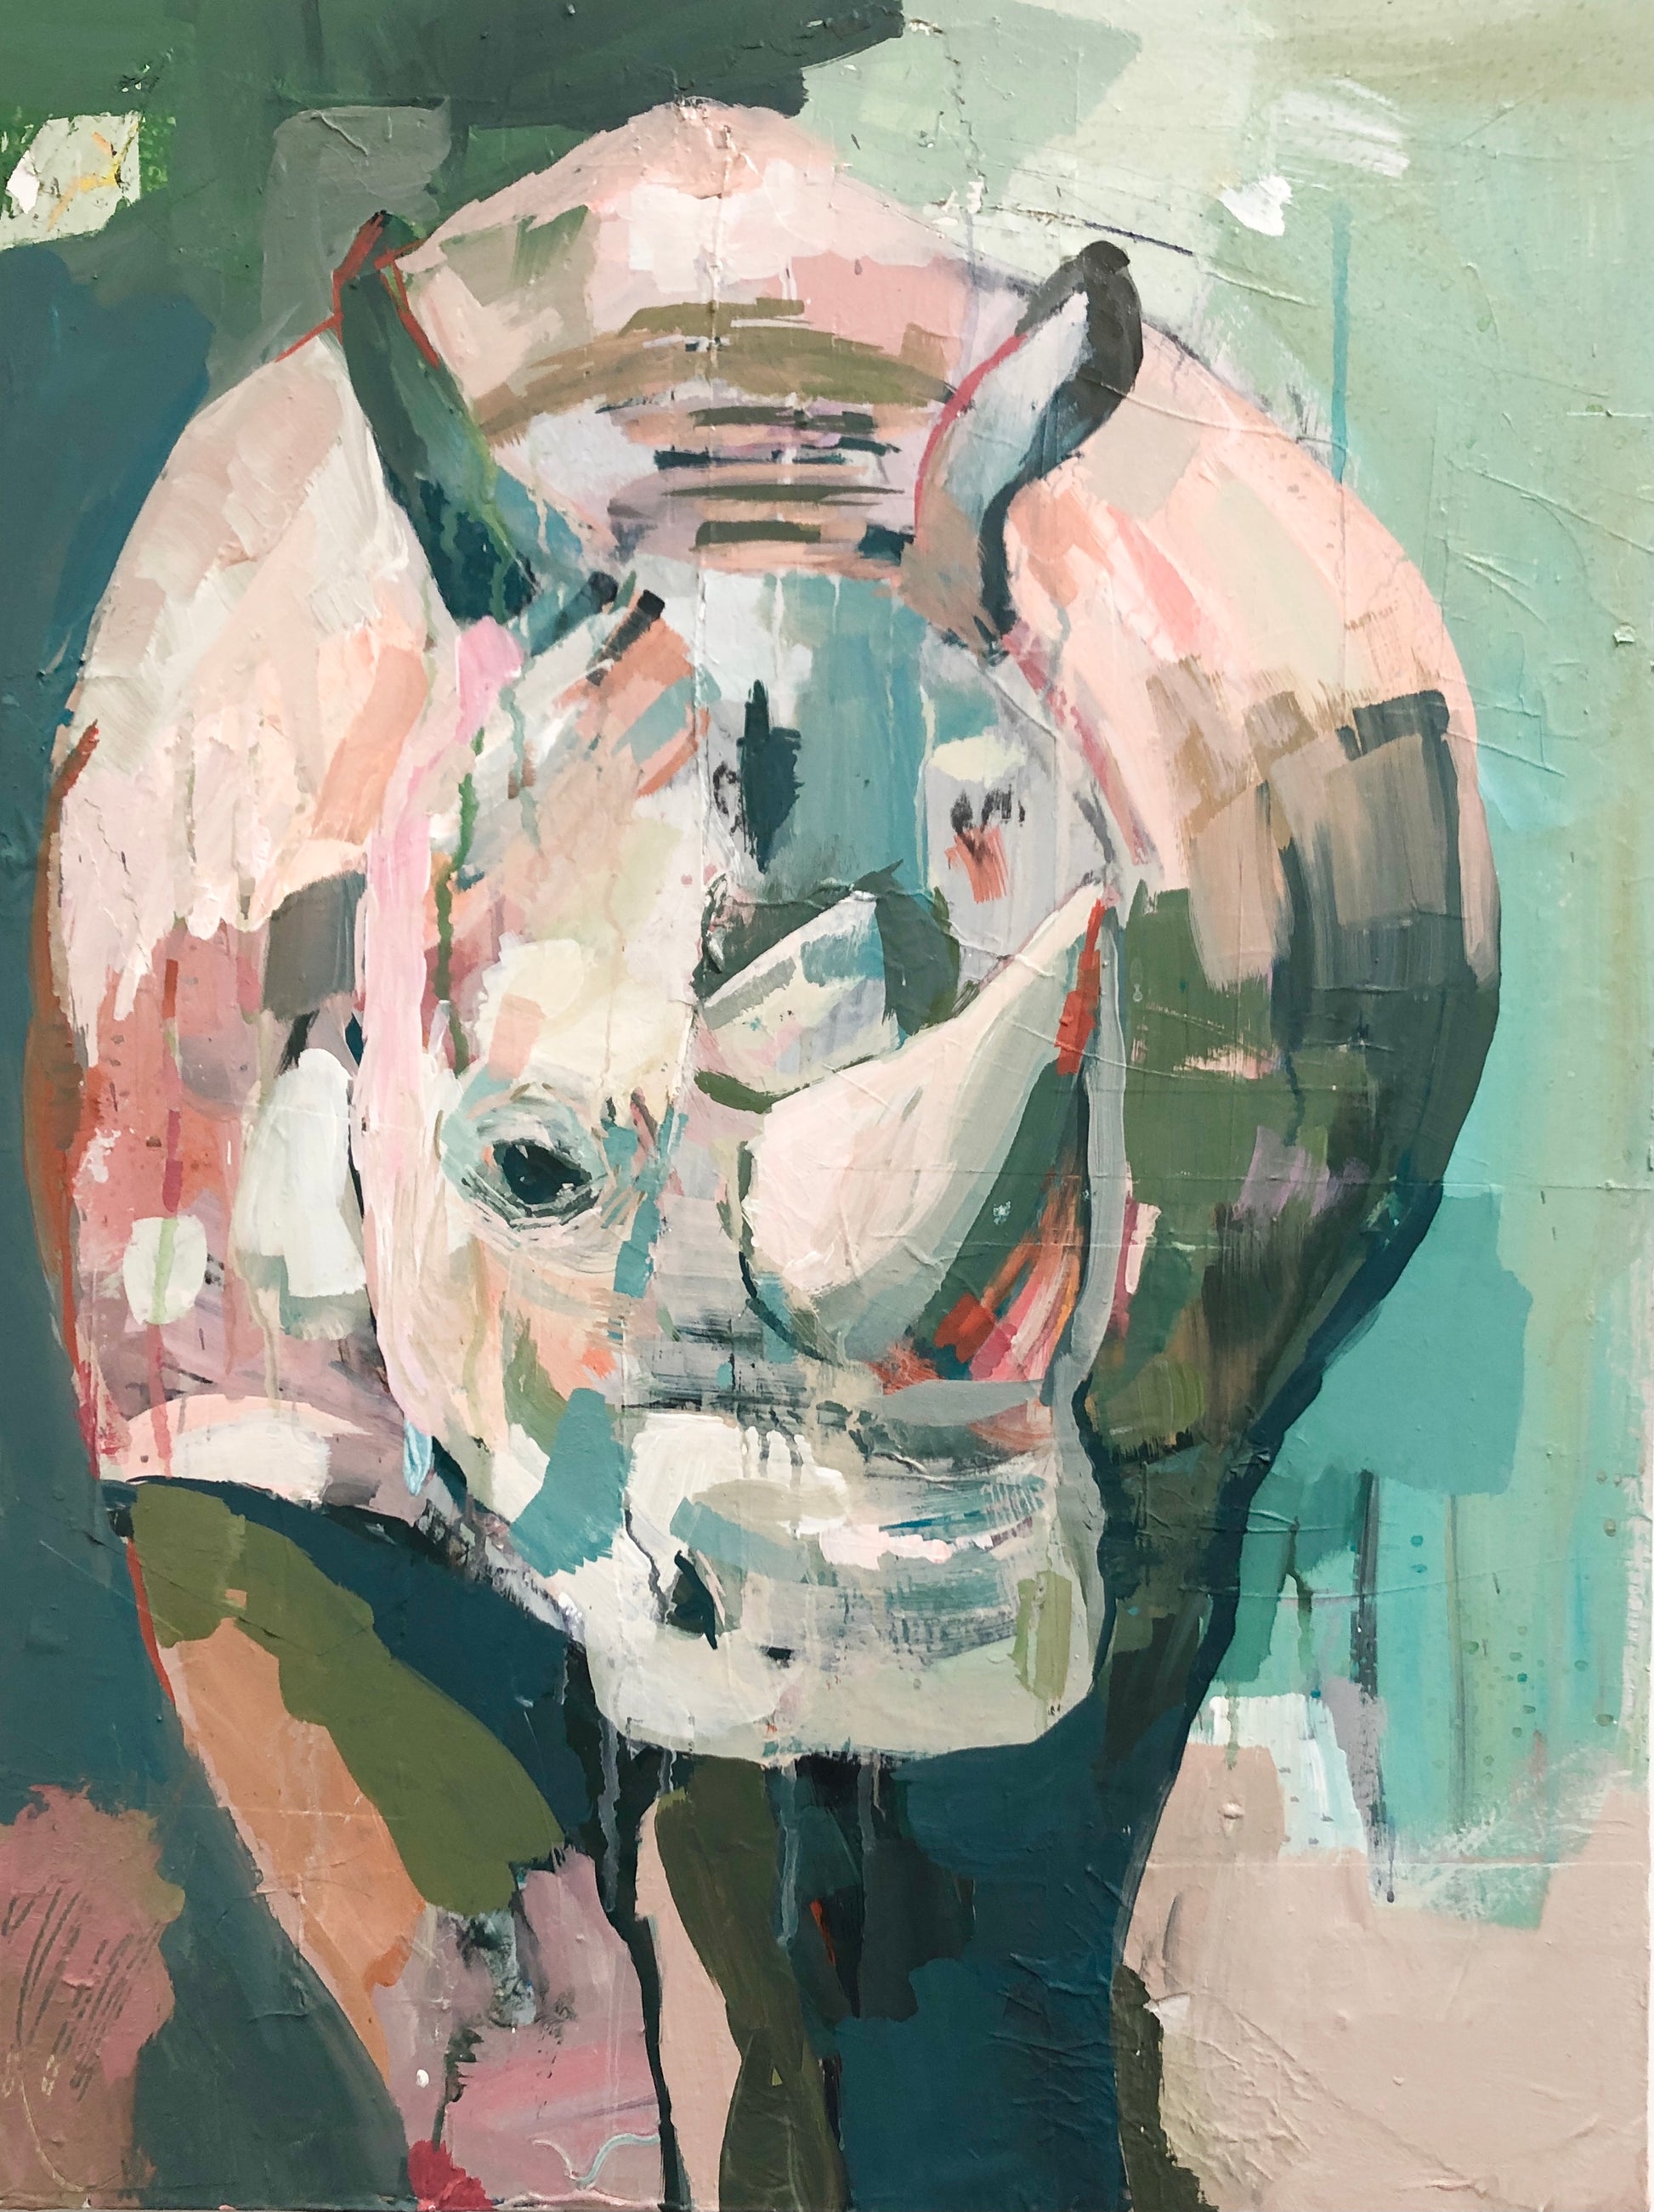 Abstract rhino painting